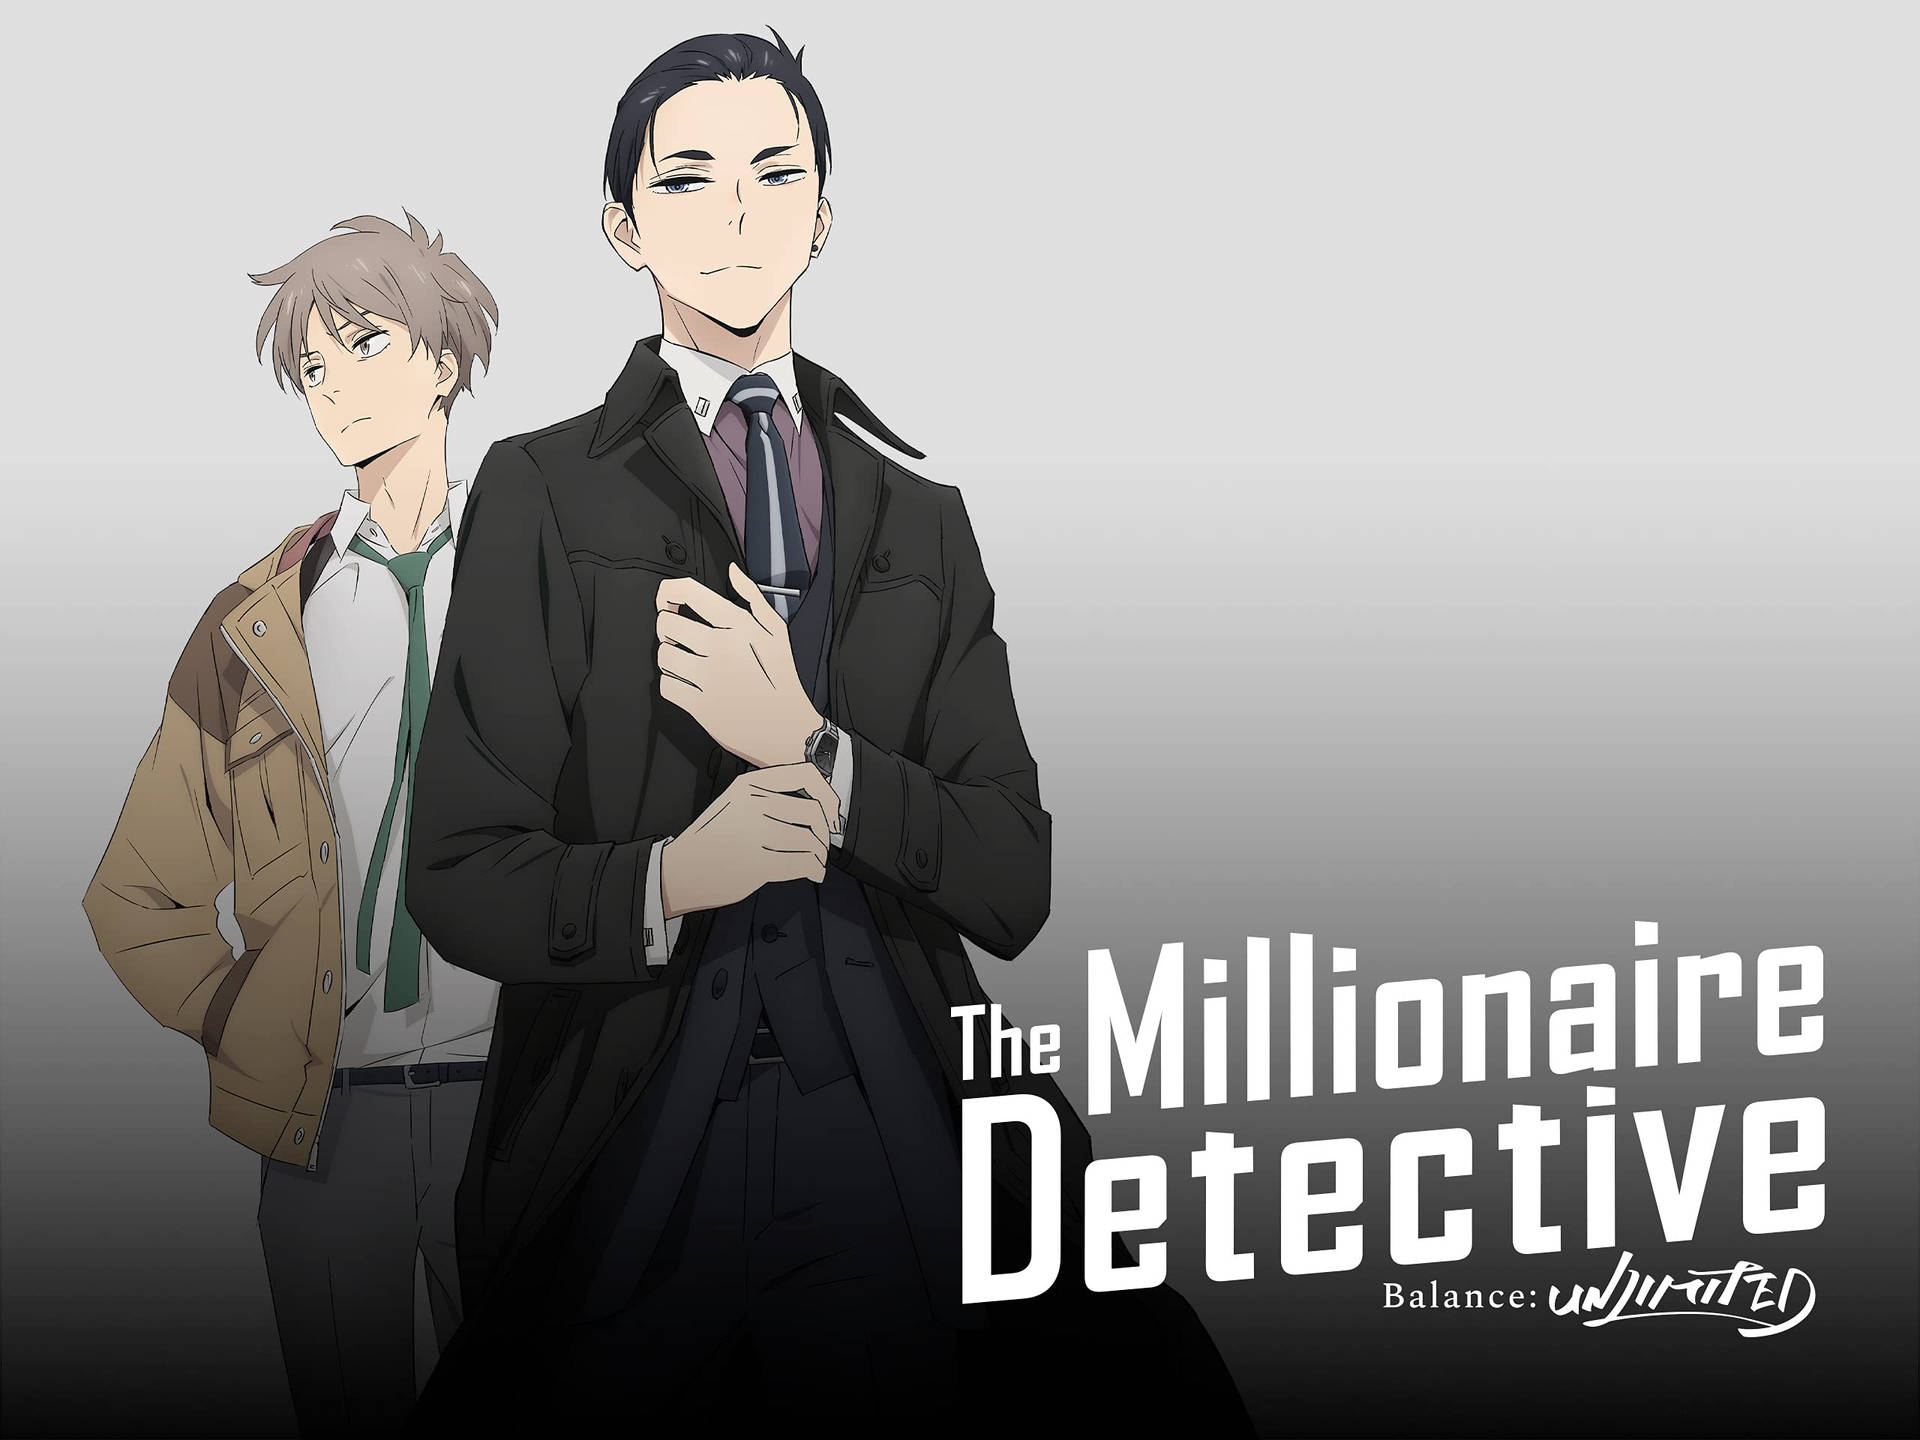 Watch The Millionaire Detective  Balance UNLIMITED  Crunchyroll